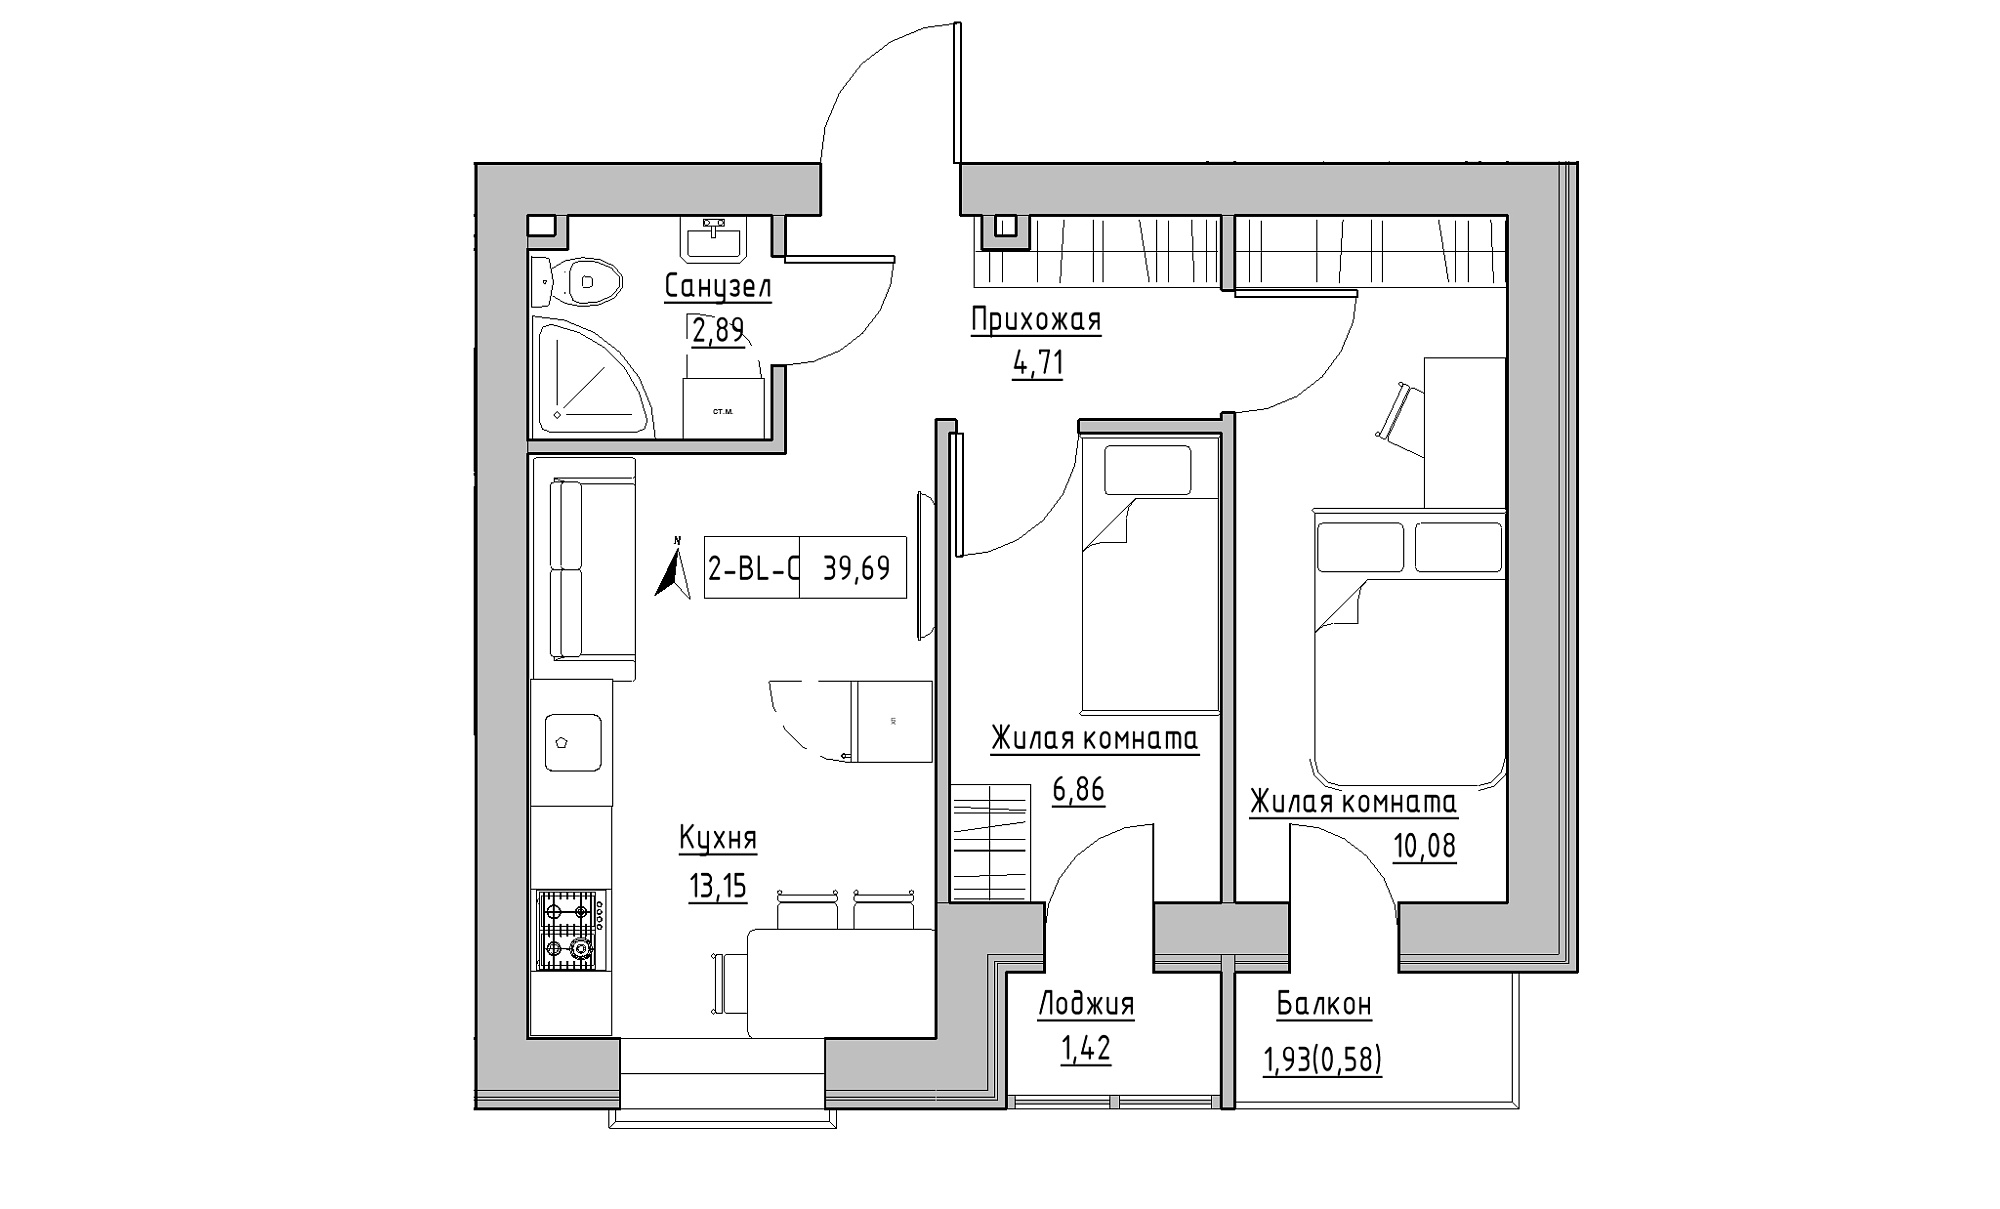 Planning 2-rm flats area 39.69m2, KS-016-03/0005.